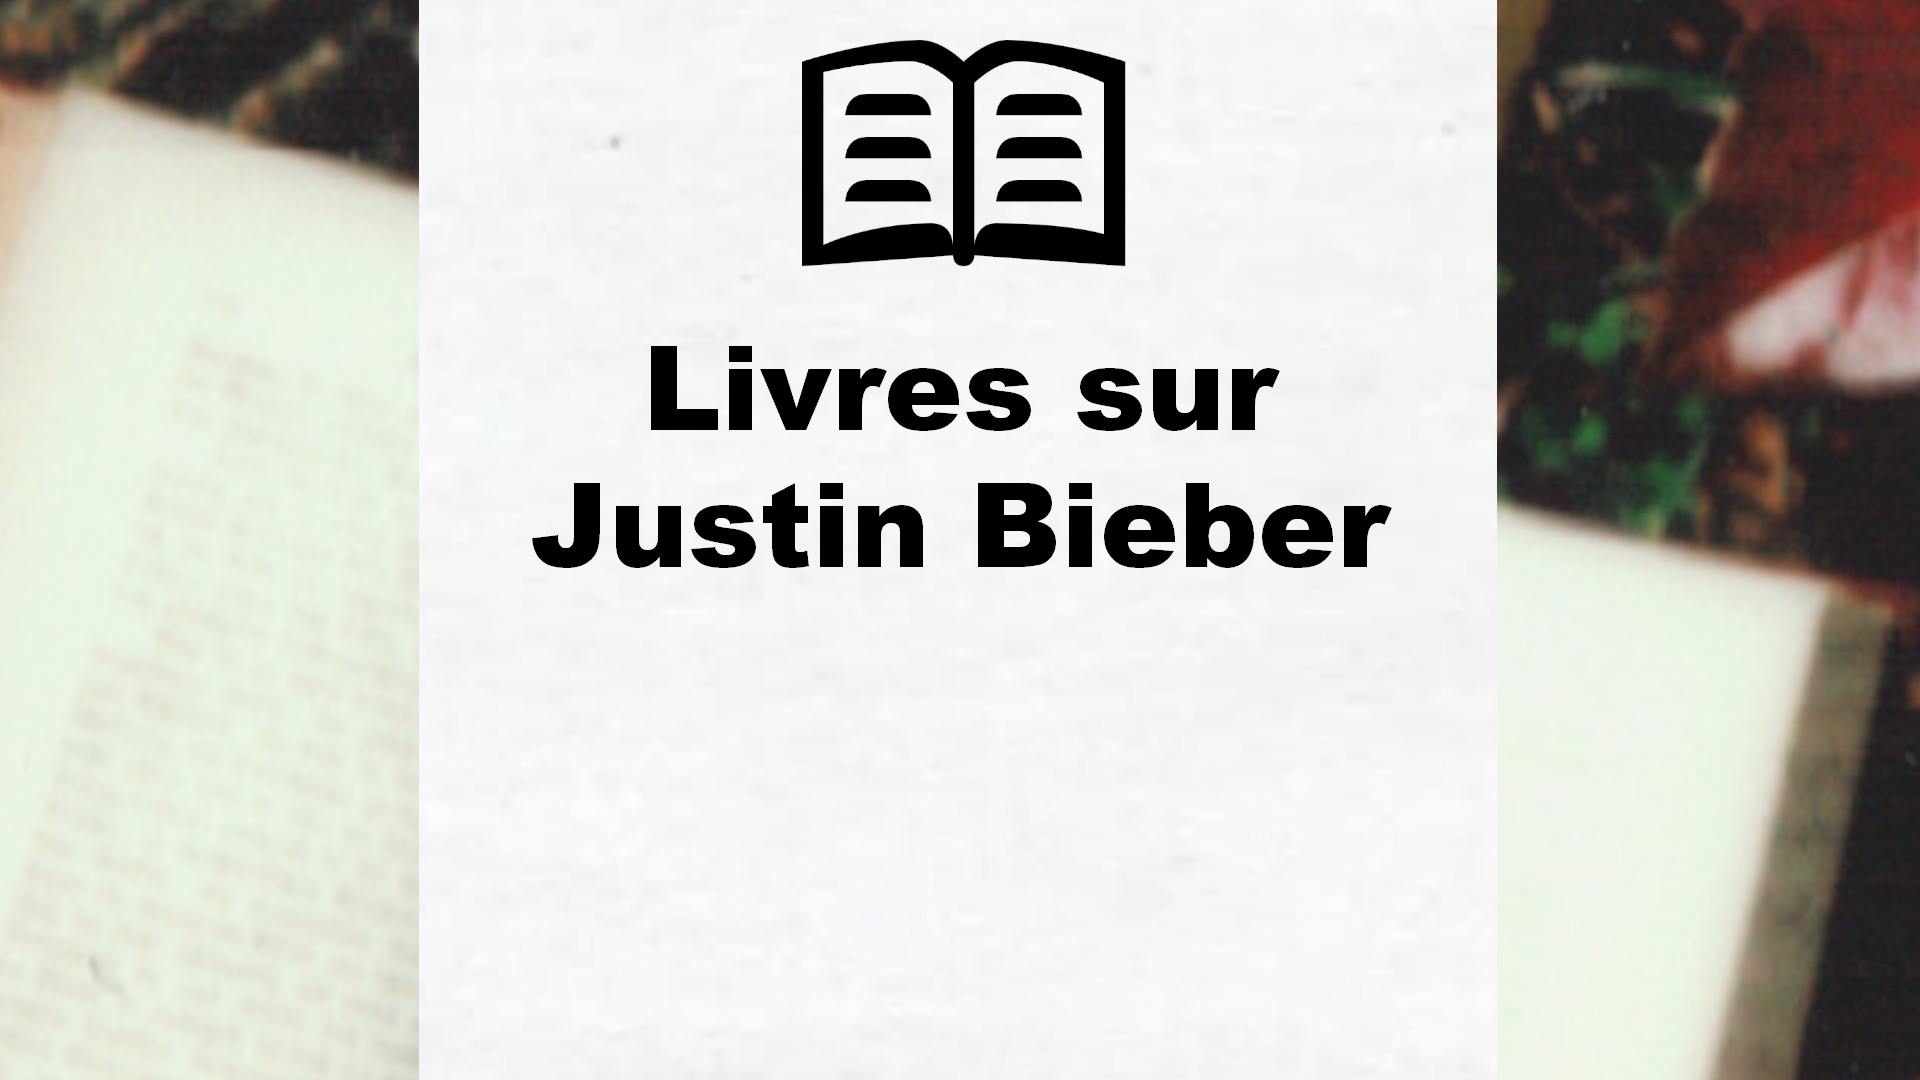 Livres sur Justin Bieber